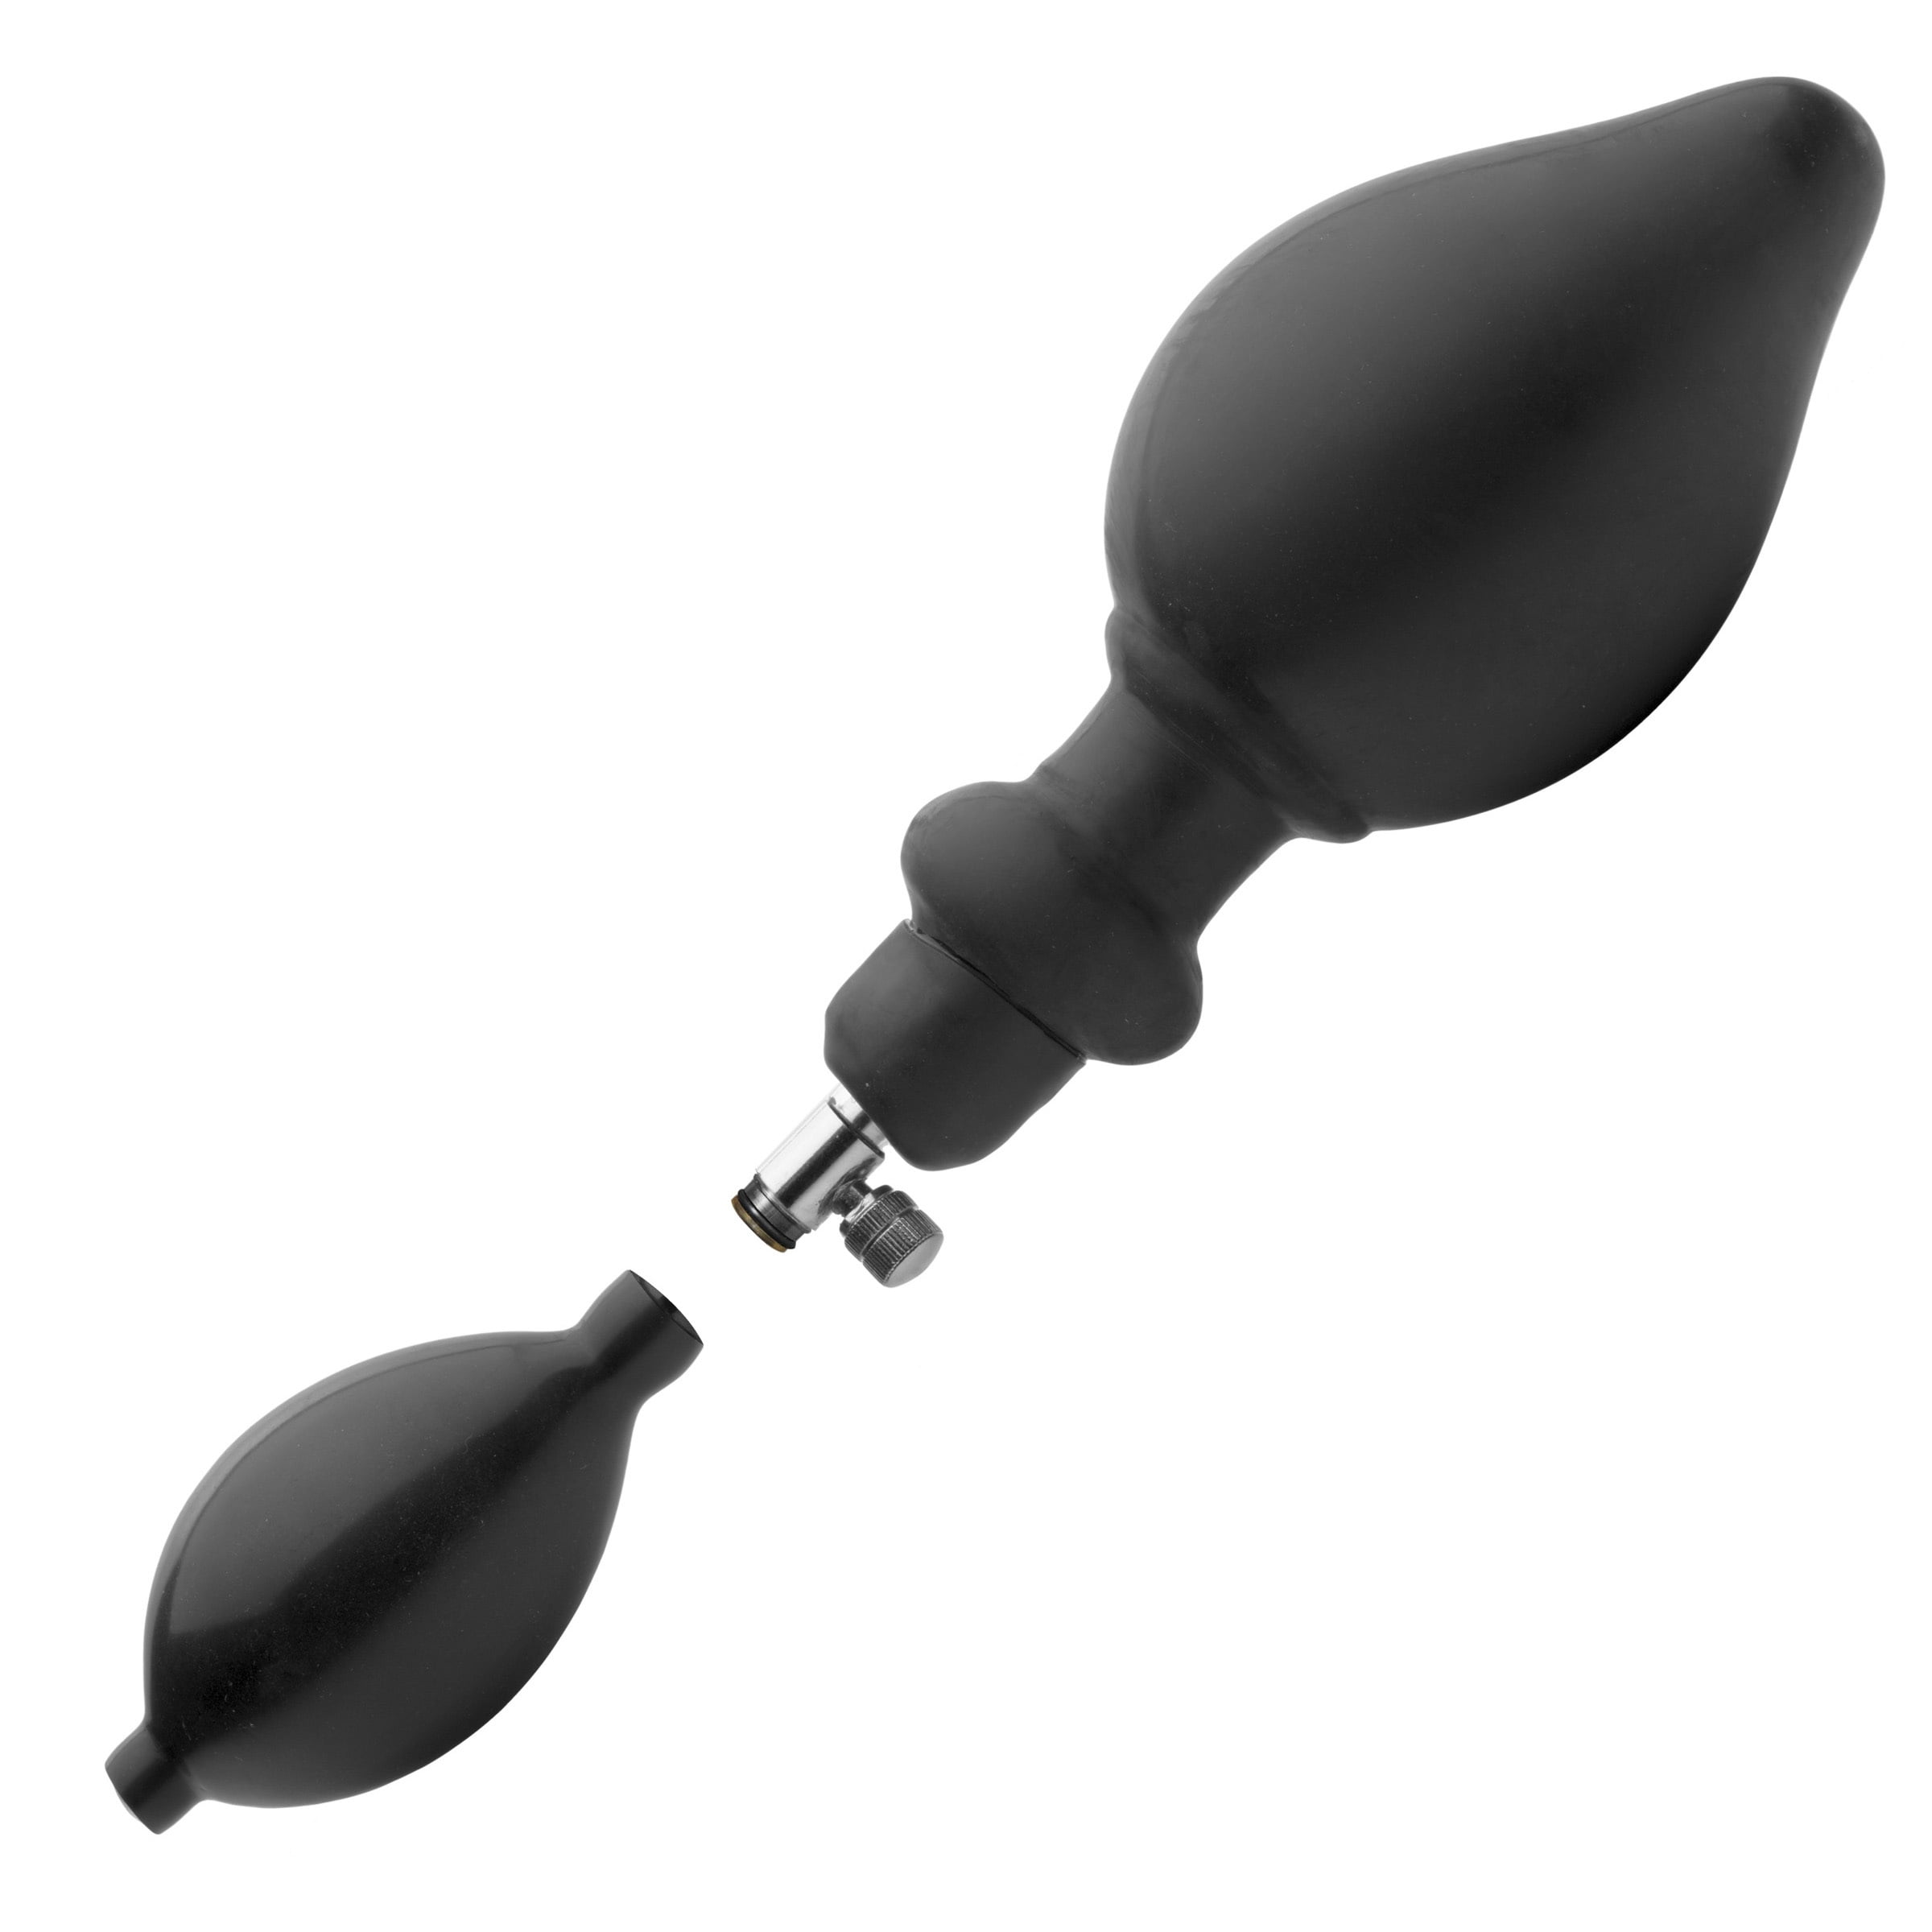 Expander Inflatable Anal Plug with Pump Black - Walmart.com